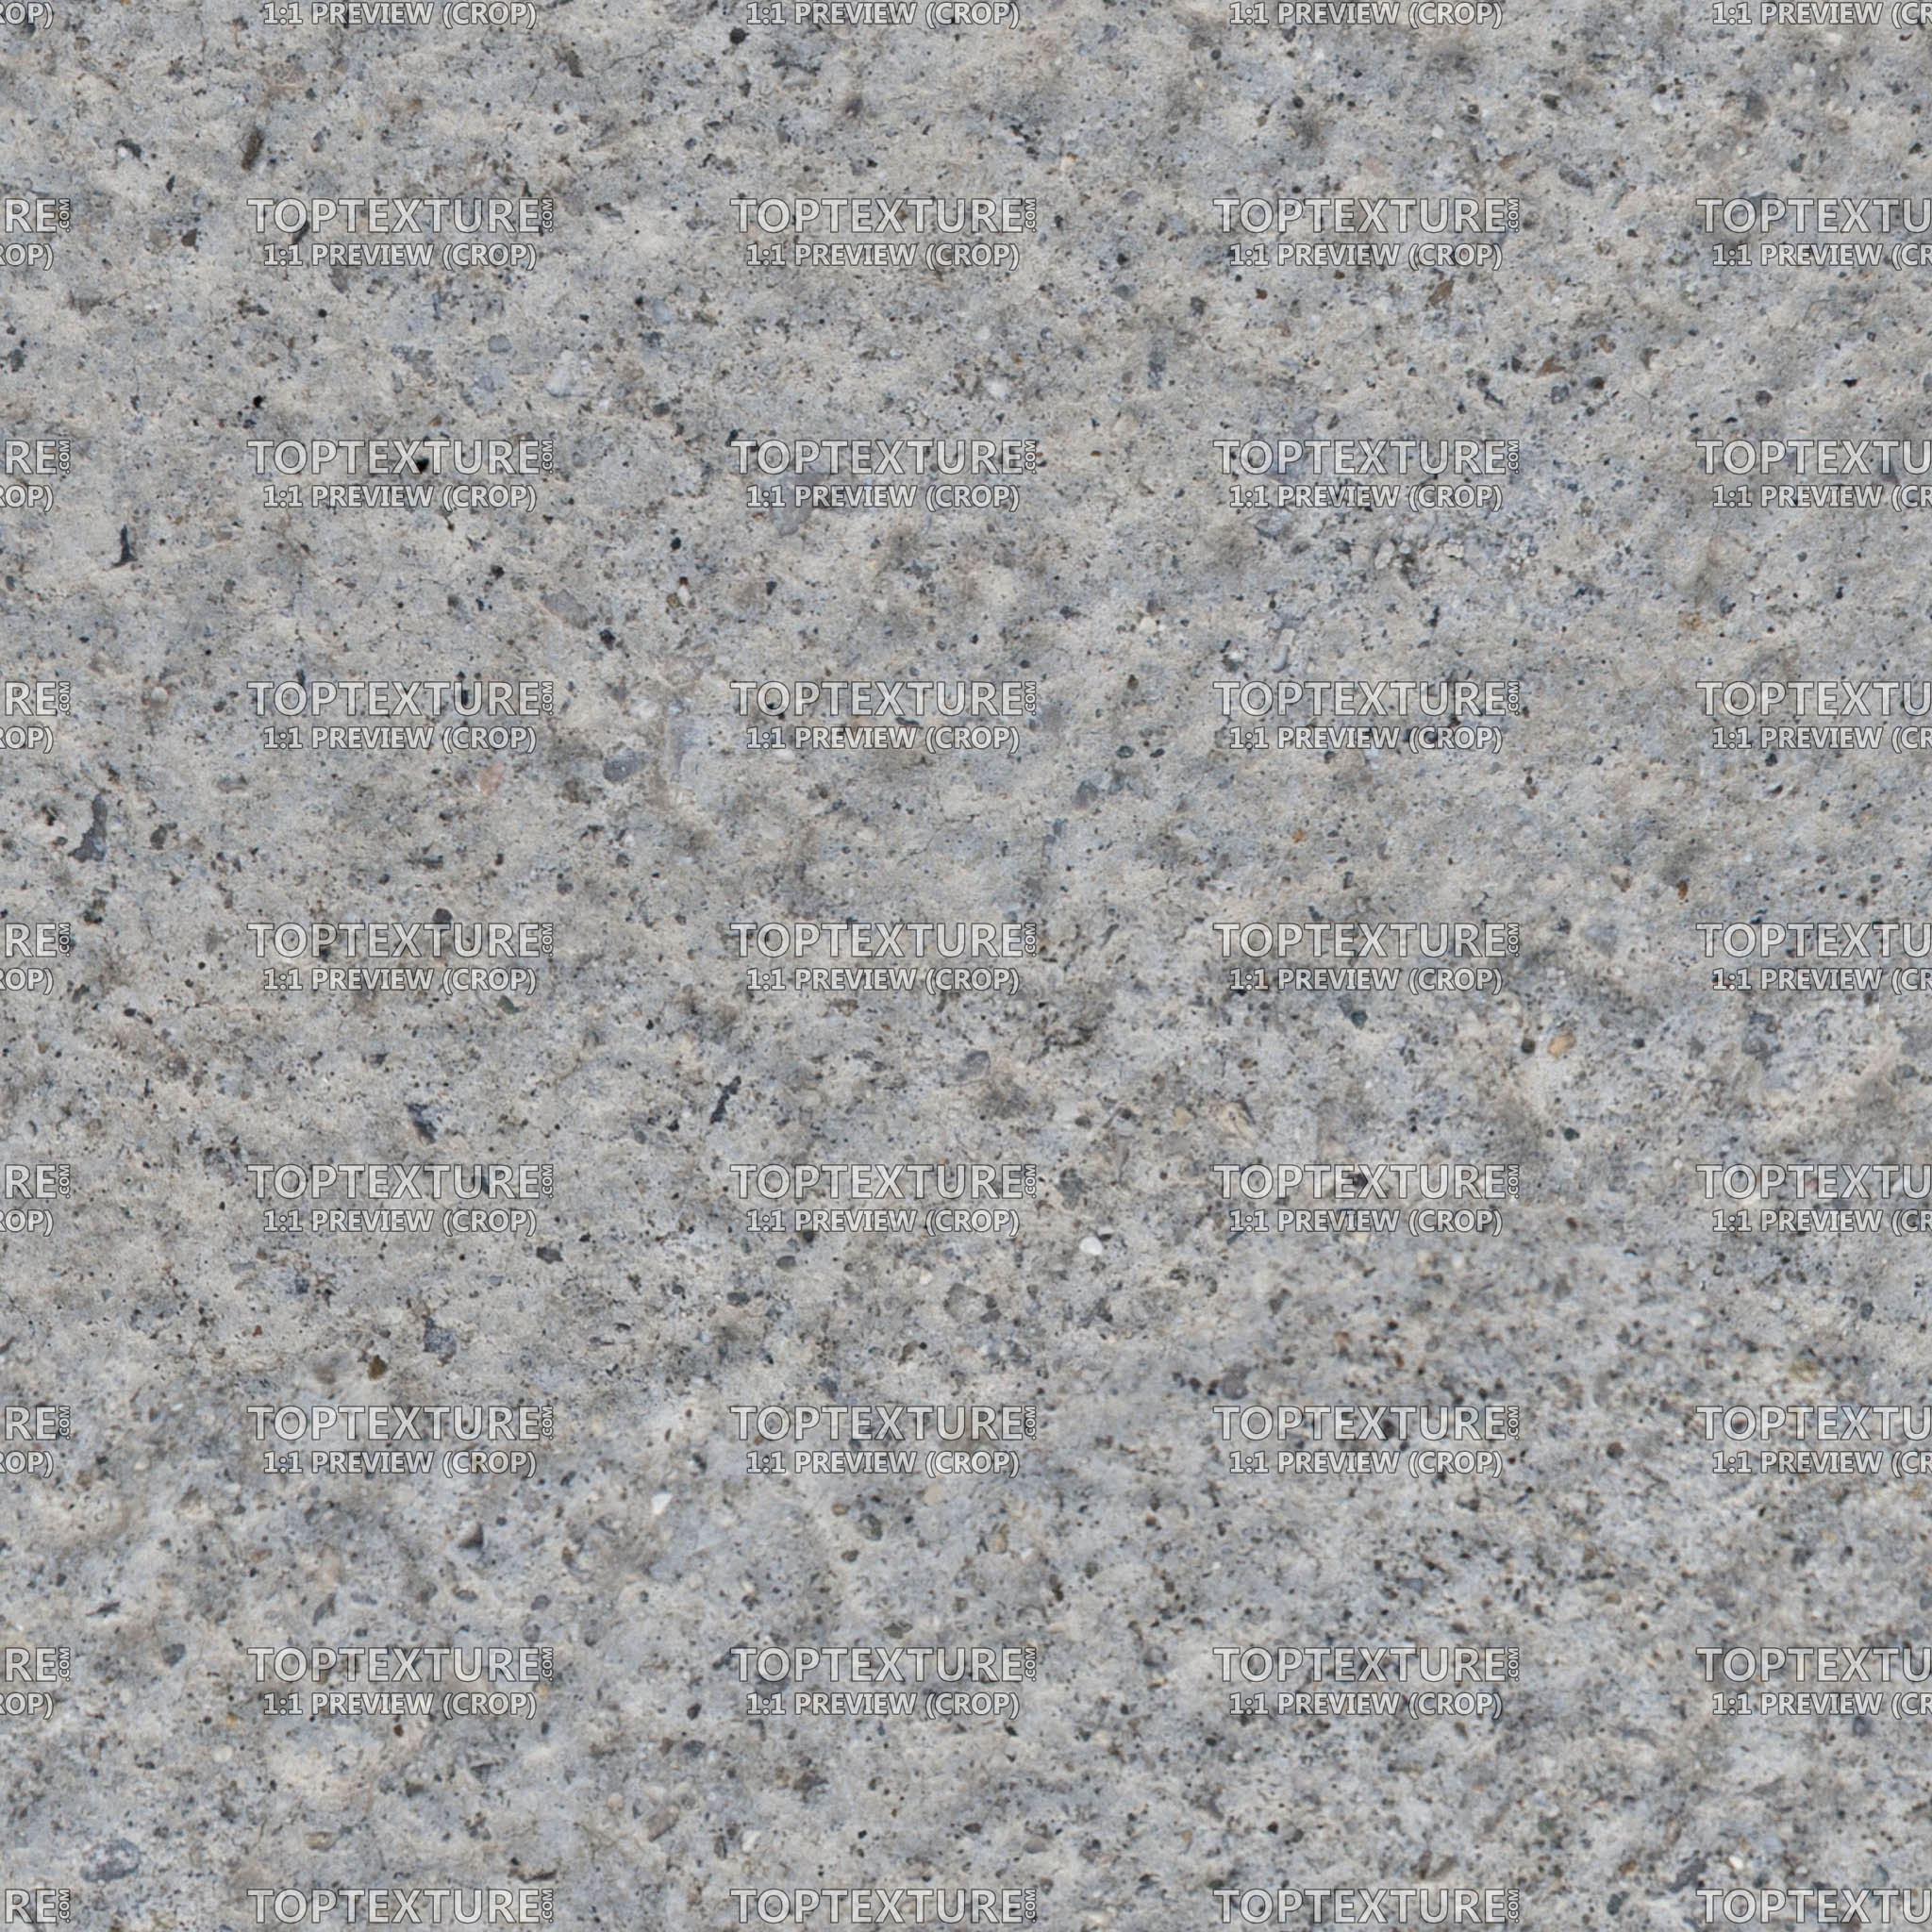 Rough Concrete Ground Closeup - Top Texture